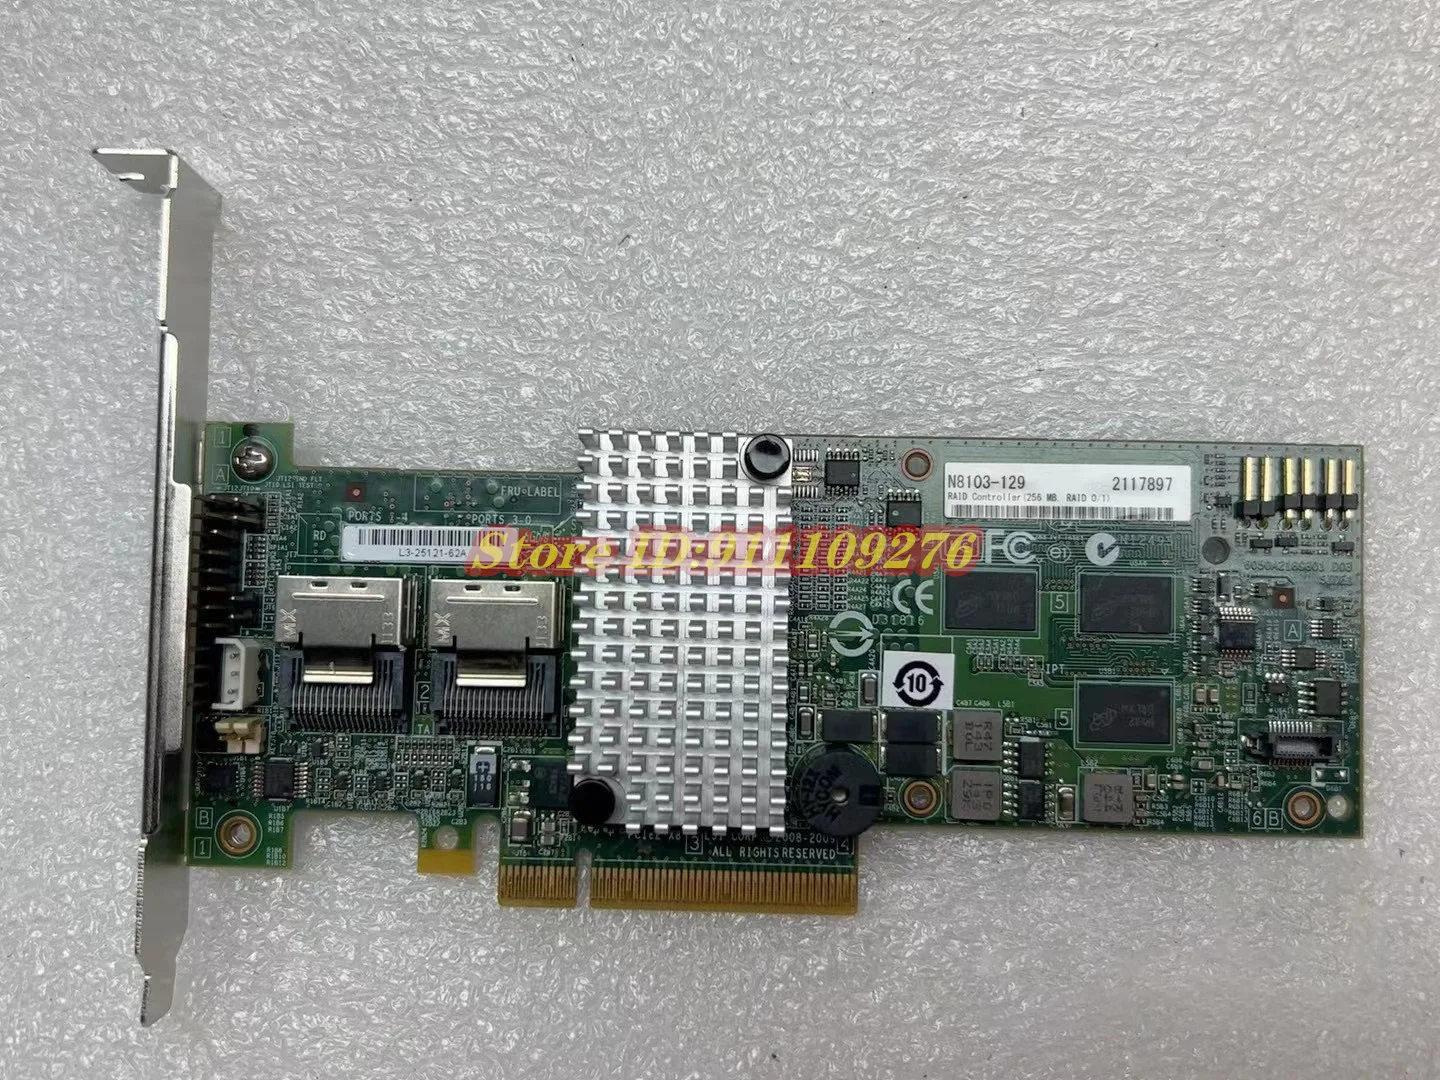 

9264-8i RAID Controllers / HBA Storage Cards